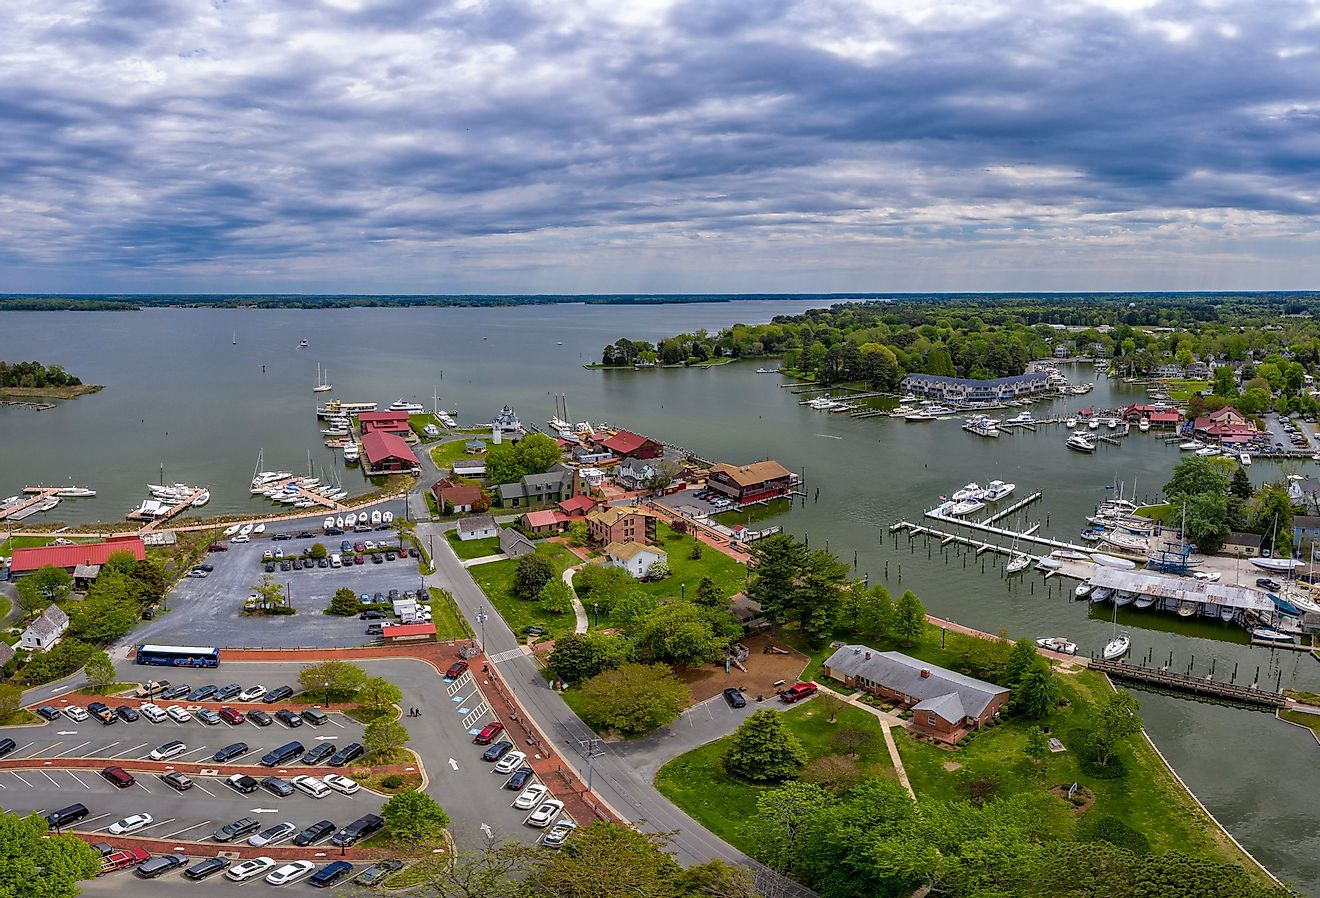 St. Michaels Maryland aerial view panorama in Chesapeake bay. Image credit Andrea Izzotti via Shutterstock.